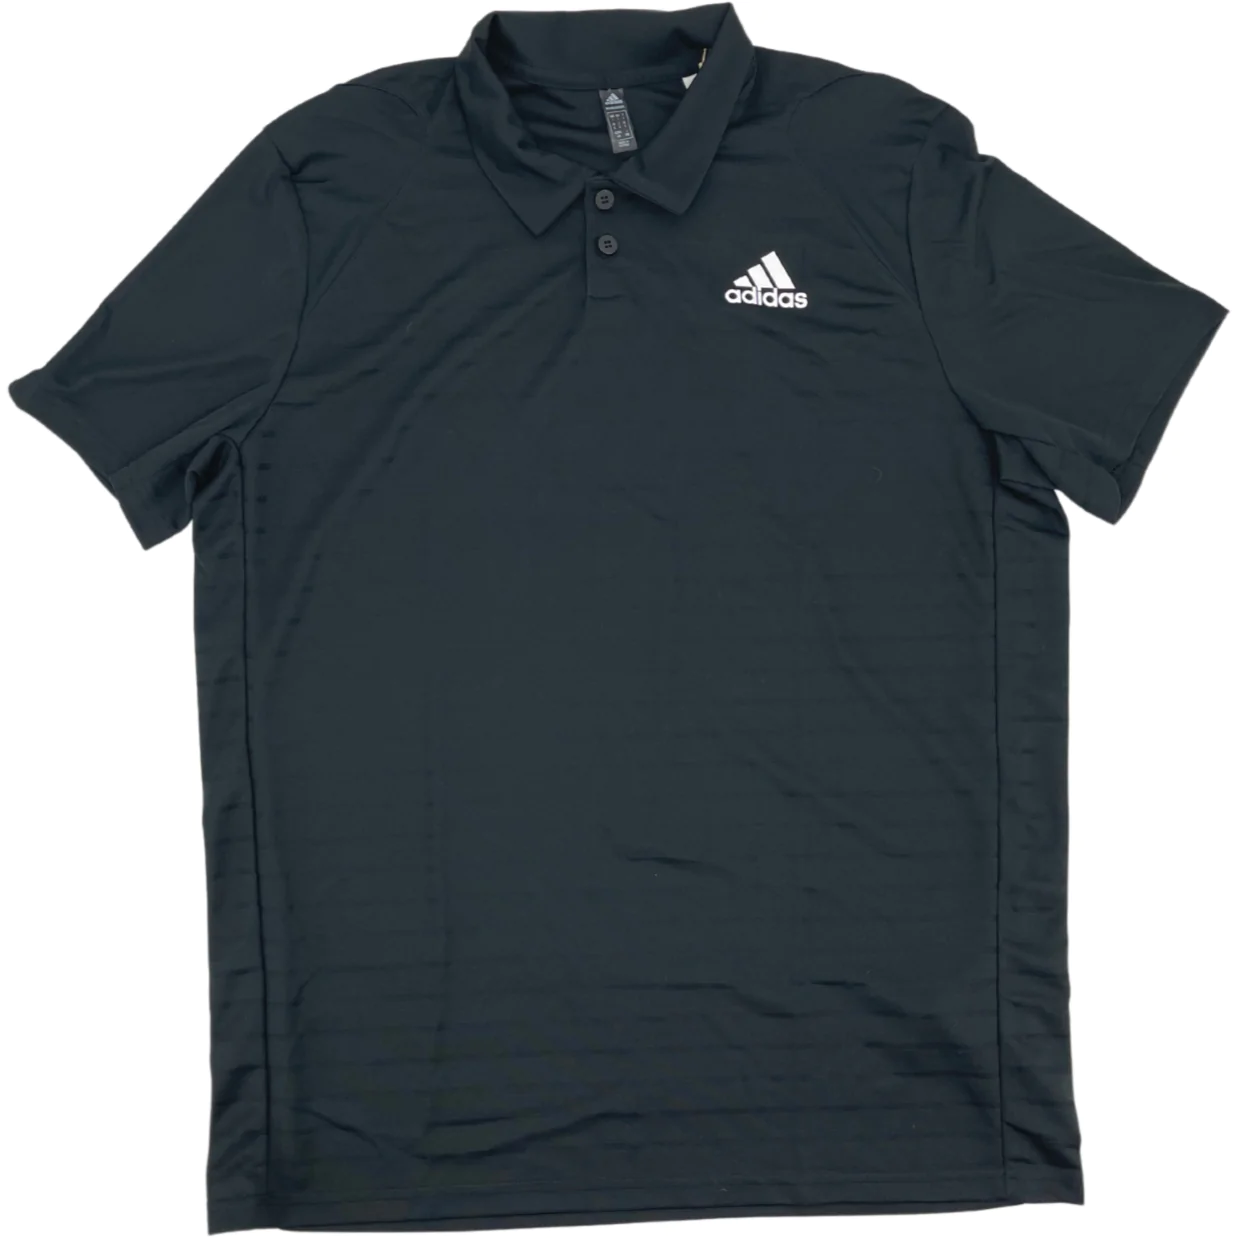 Adidas Men’s Golf Shirt / Men’s Athletic Shirt / Black / Various Size ...